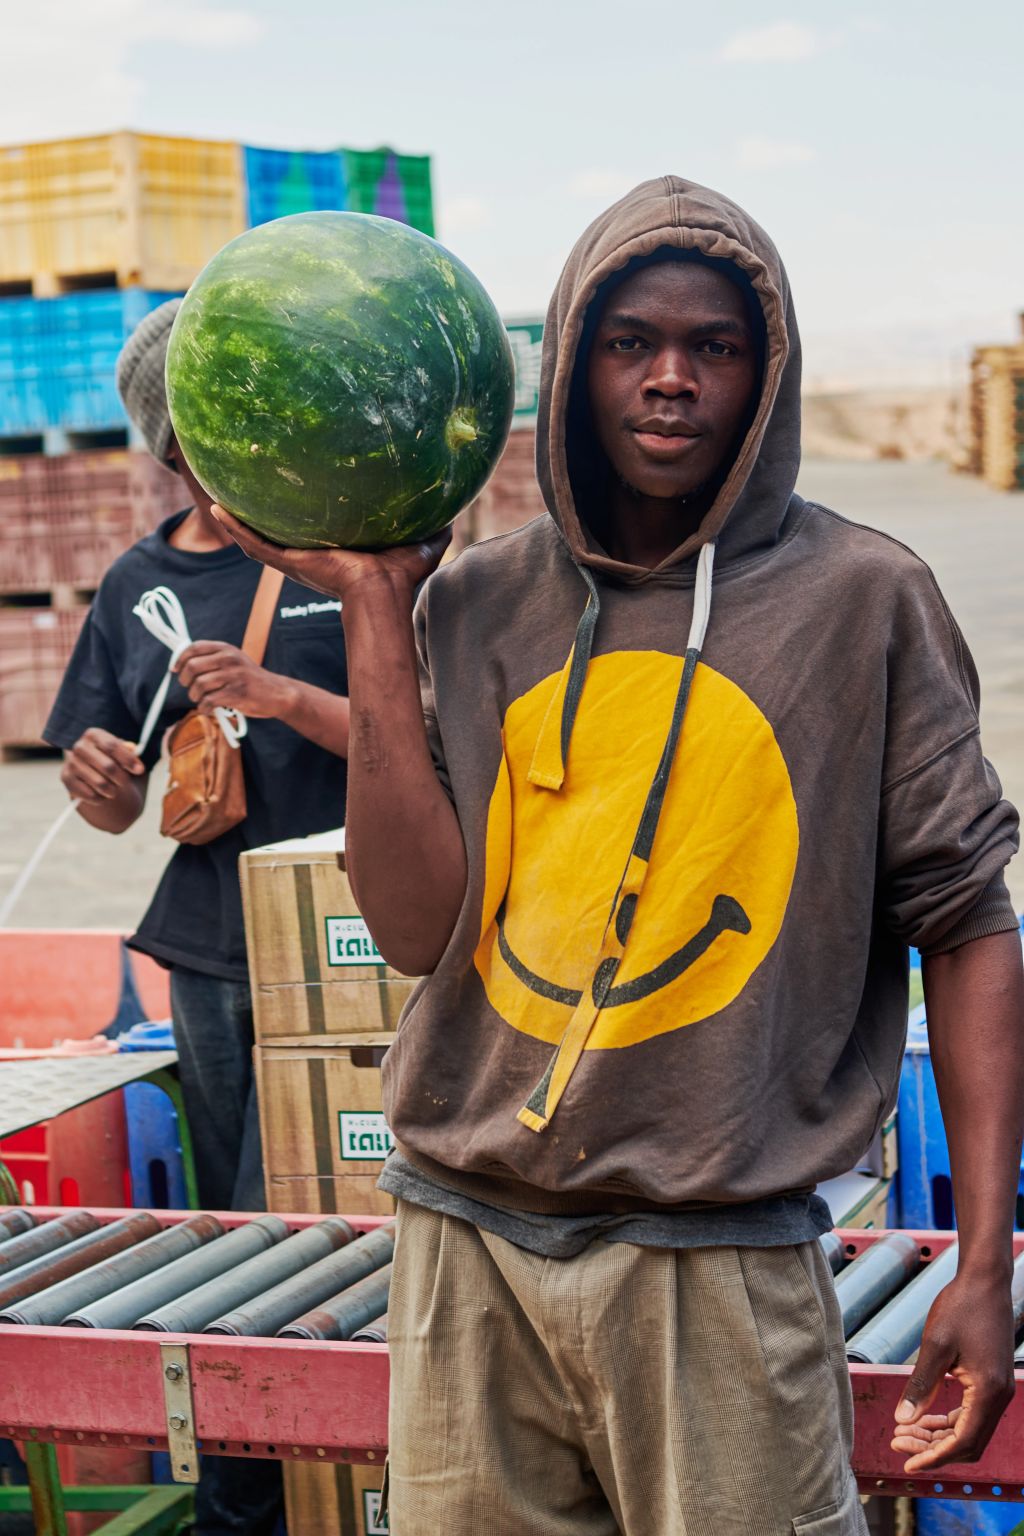 SHILOH JOSH on LinkedIn: Watermelon farming in Kenya can be profitable ...